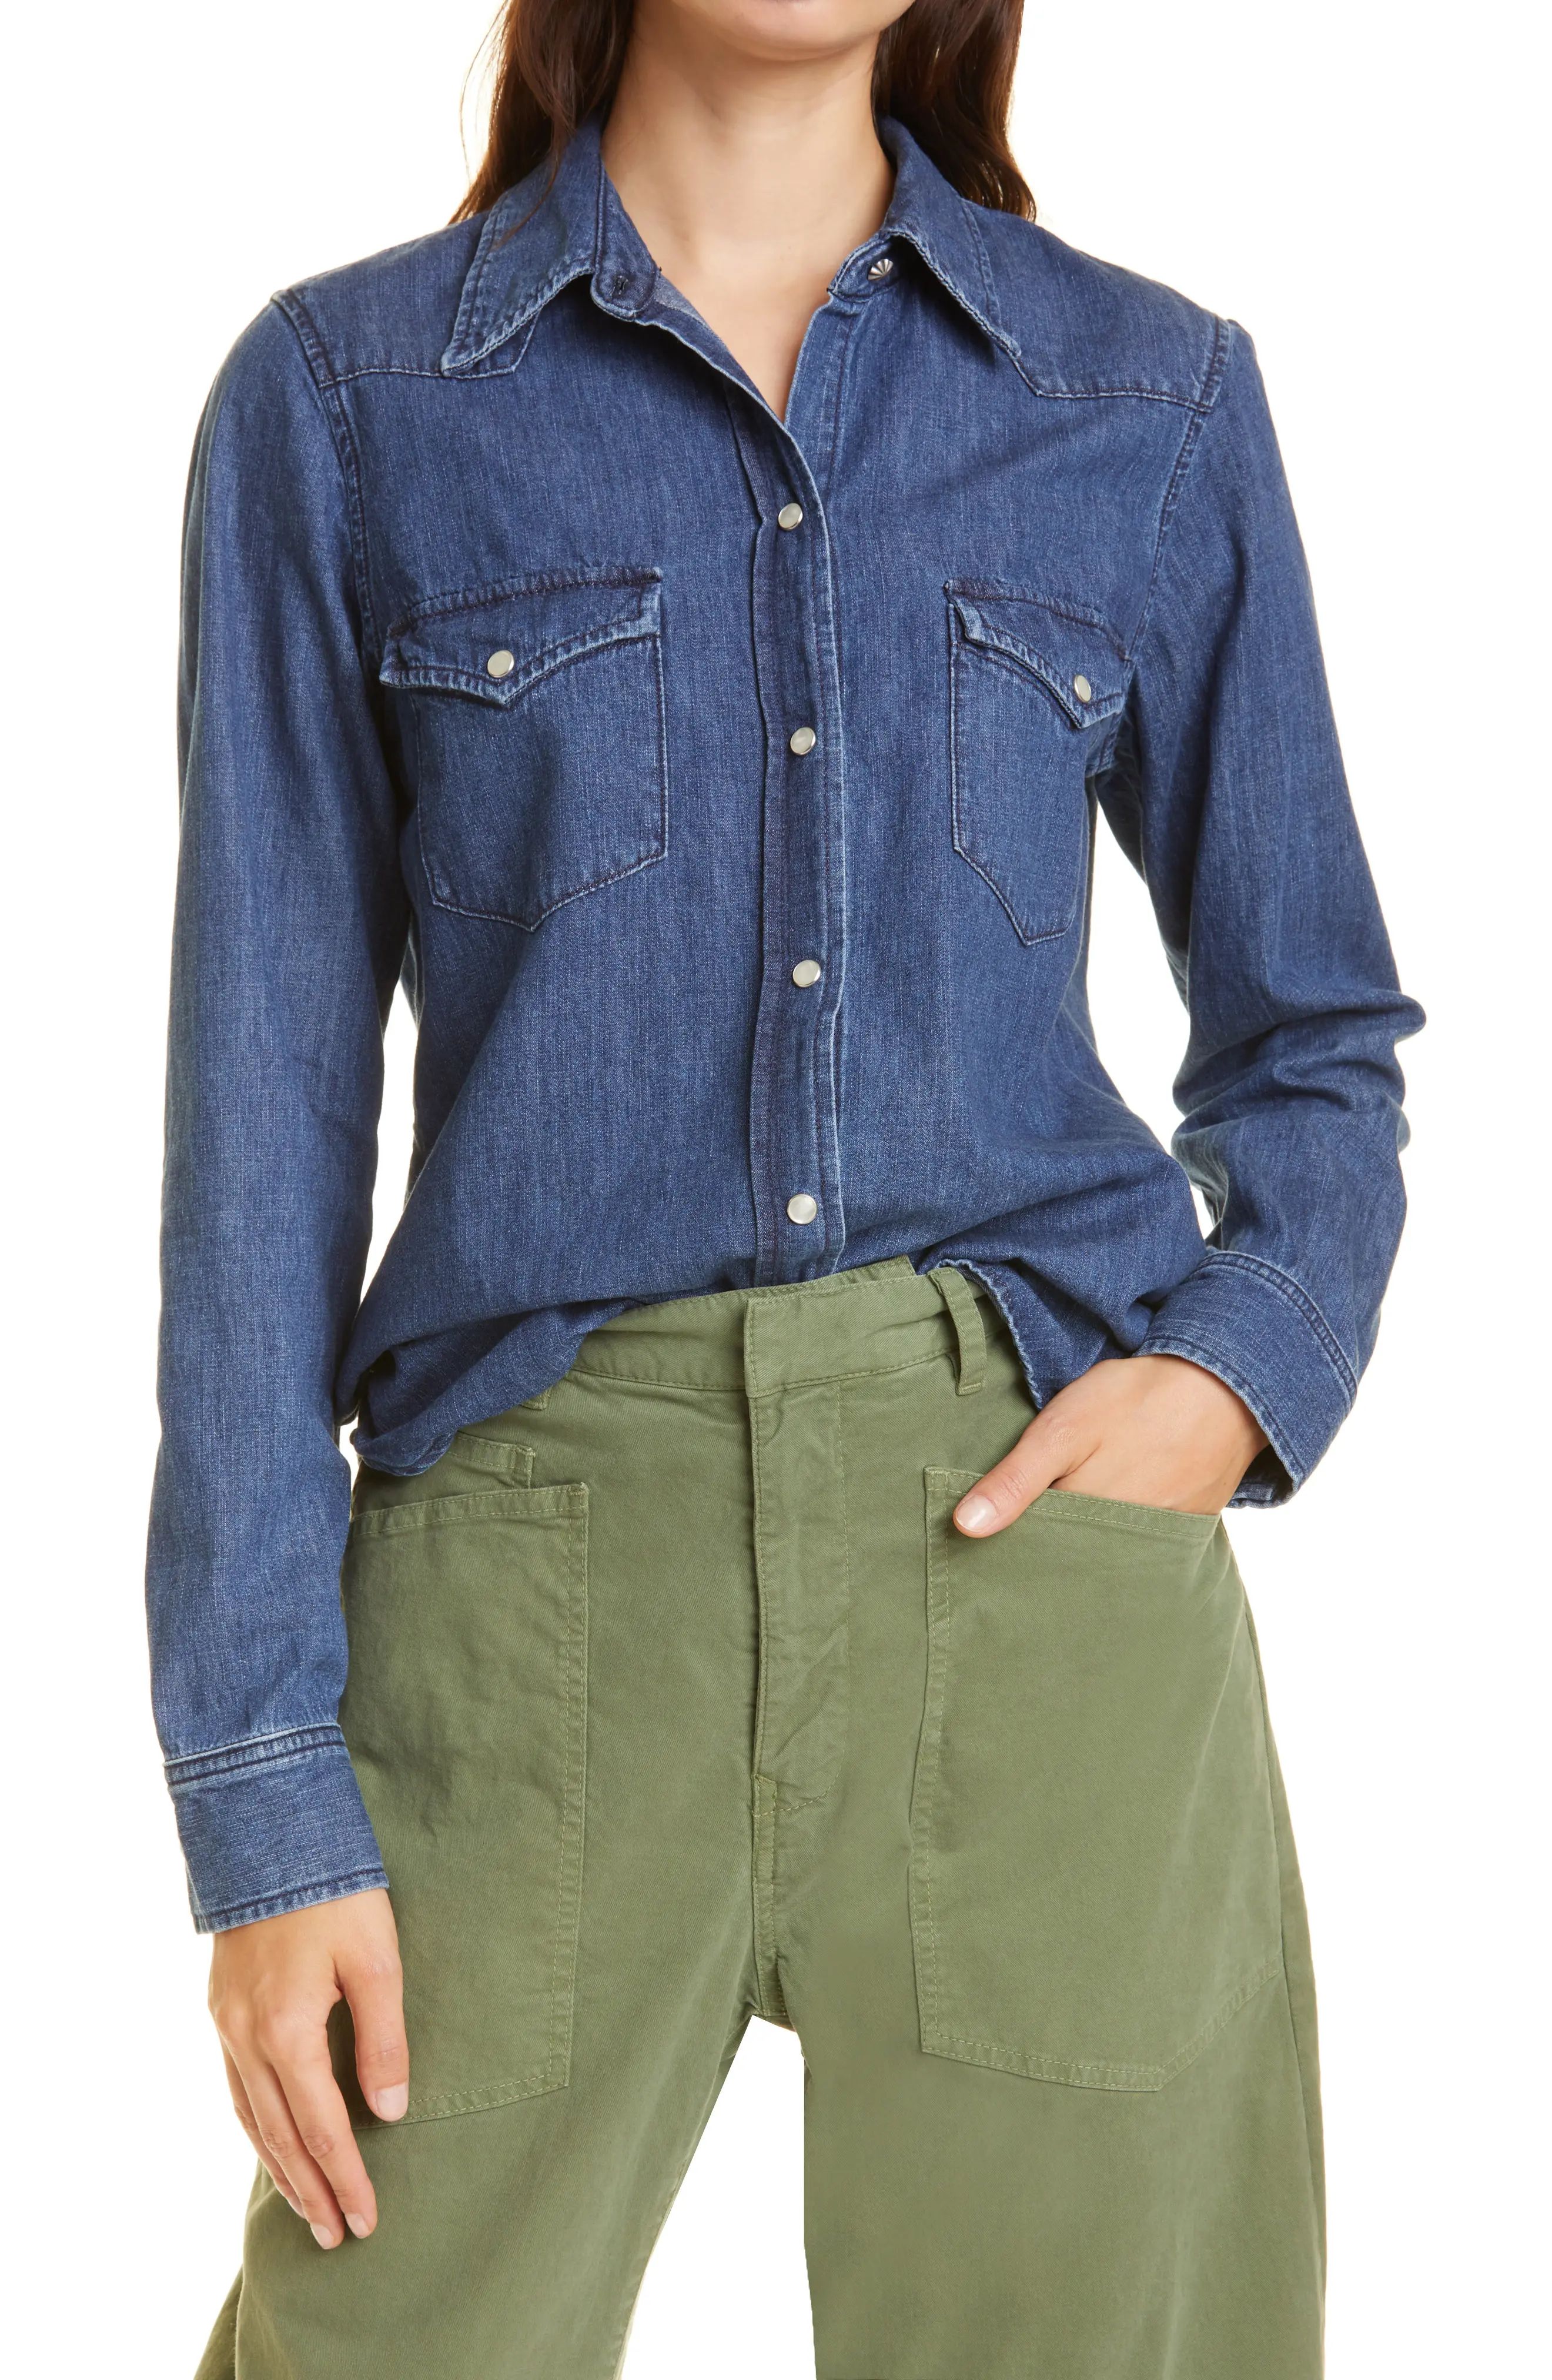 Nili Lotan Martine Cotton Denim Shirt in Deep Blue Wash at Nordstrom, Size X-Small | Nordstrom